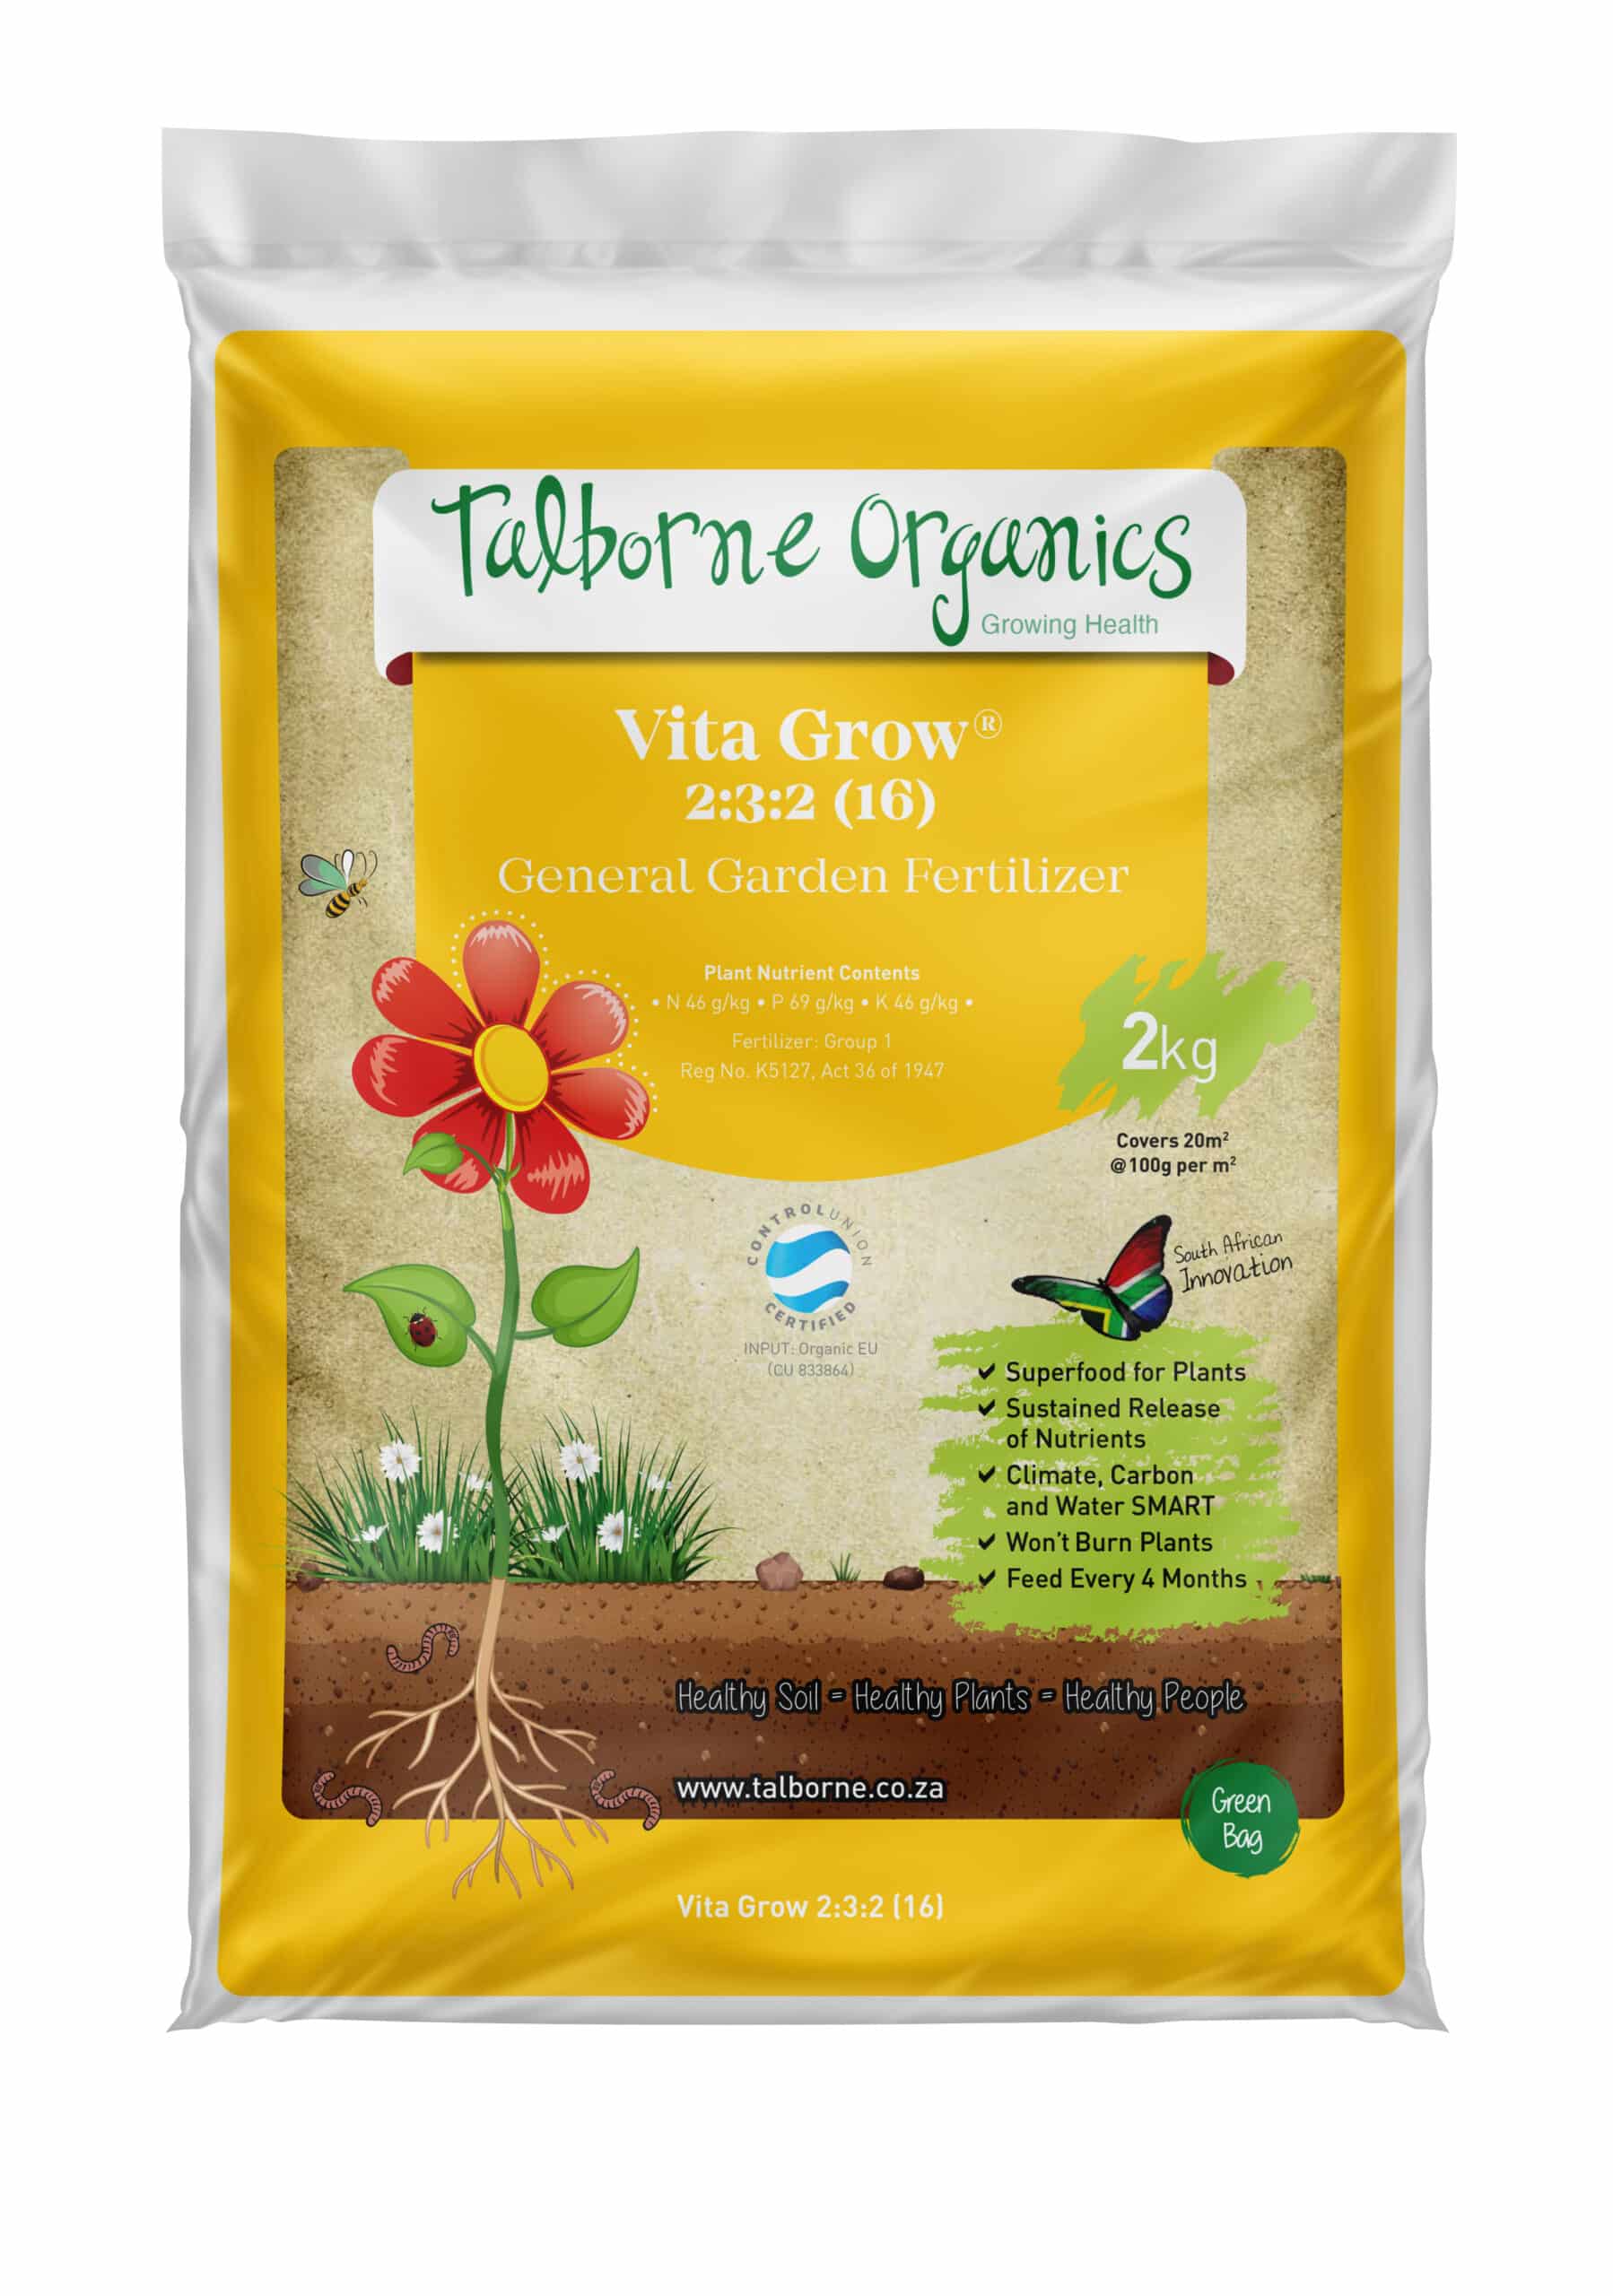 Yellow 2kg bag of Talborne Organics Vita Grow 2:3:2 (16) General Garden Fertiliser with image of flowering plant roots.